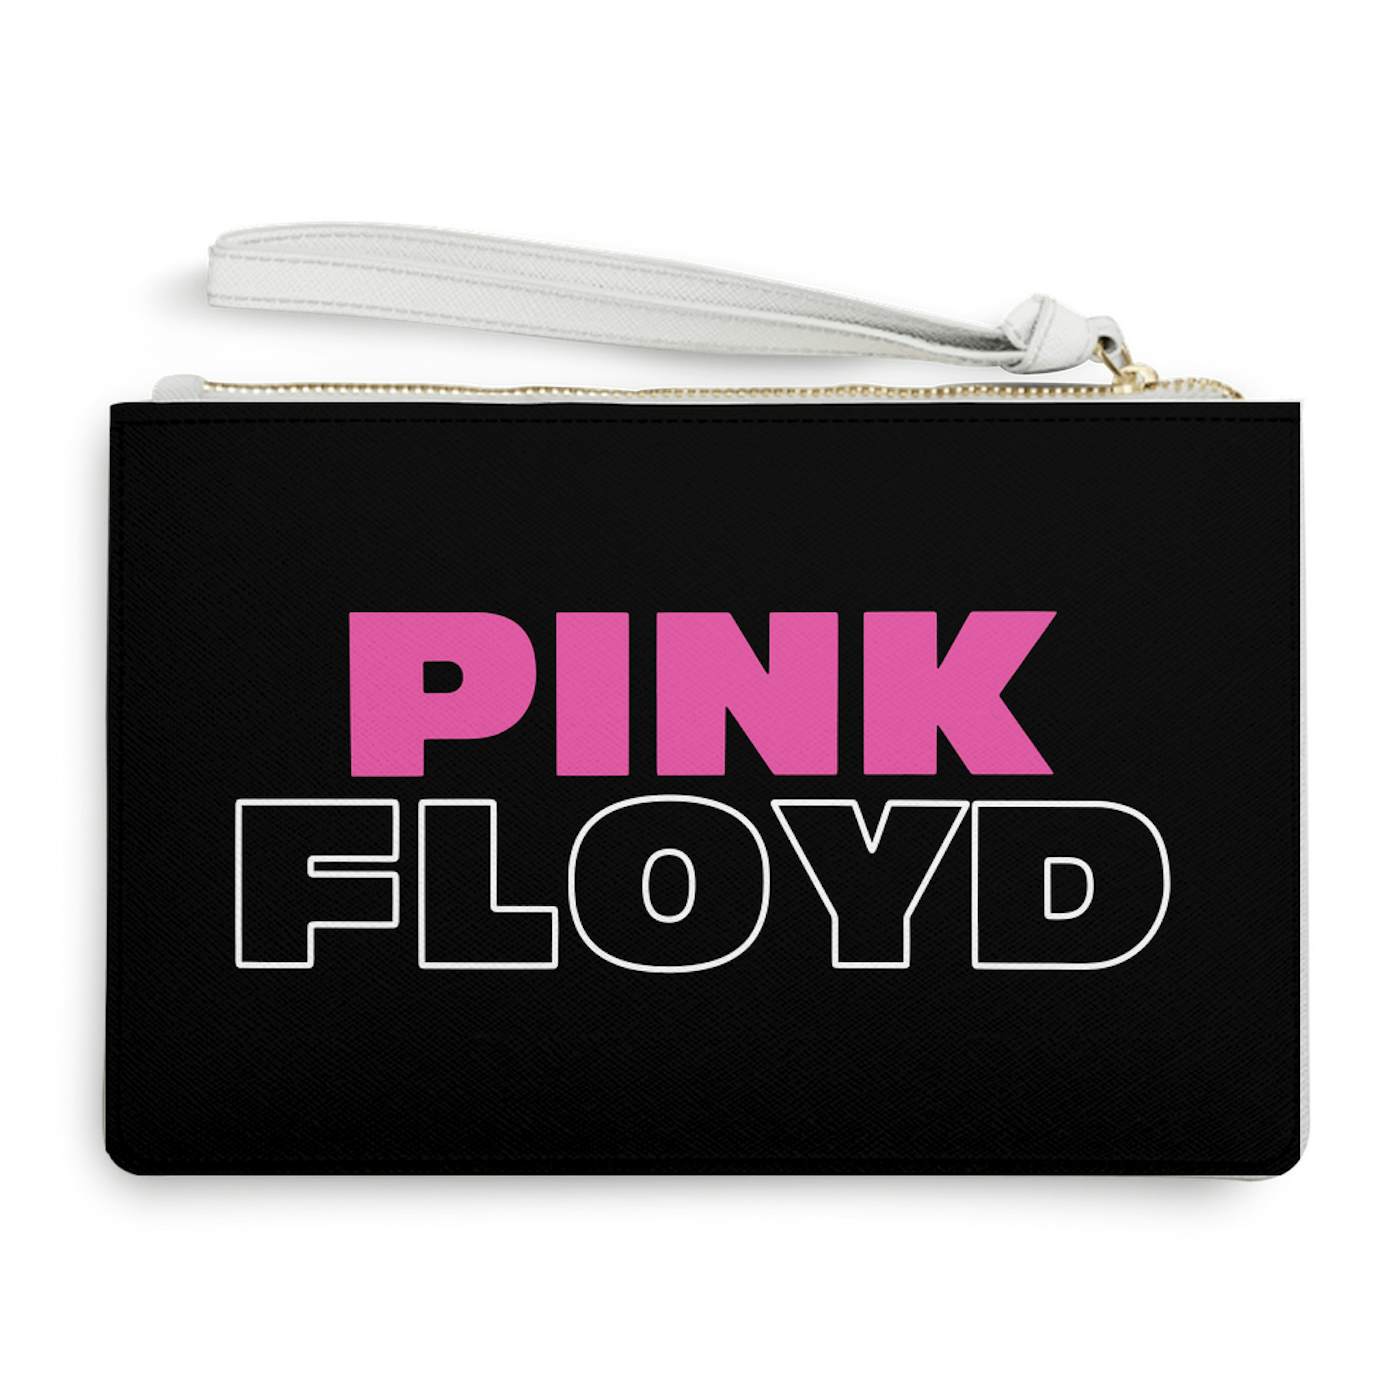 Pink Floyd Clutch | Pink Floyd Logo Reverse (Merchbar Exclusive) Pink Floyd Clutch Bag